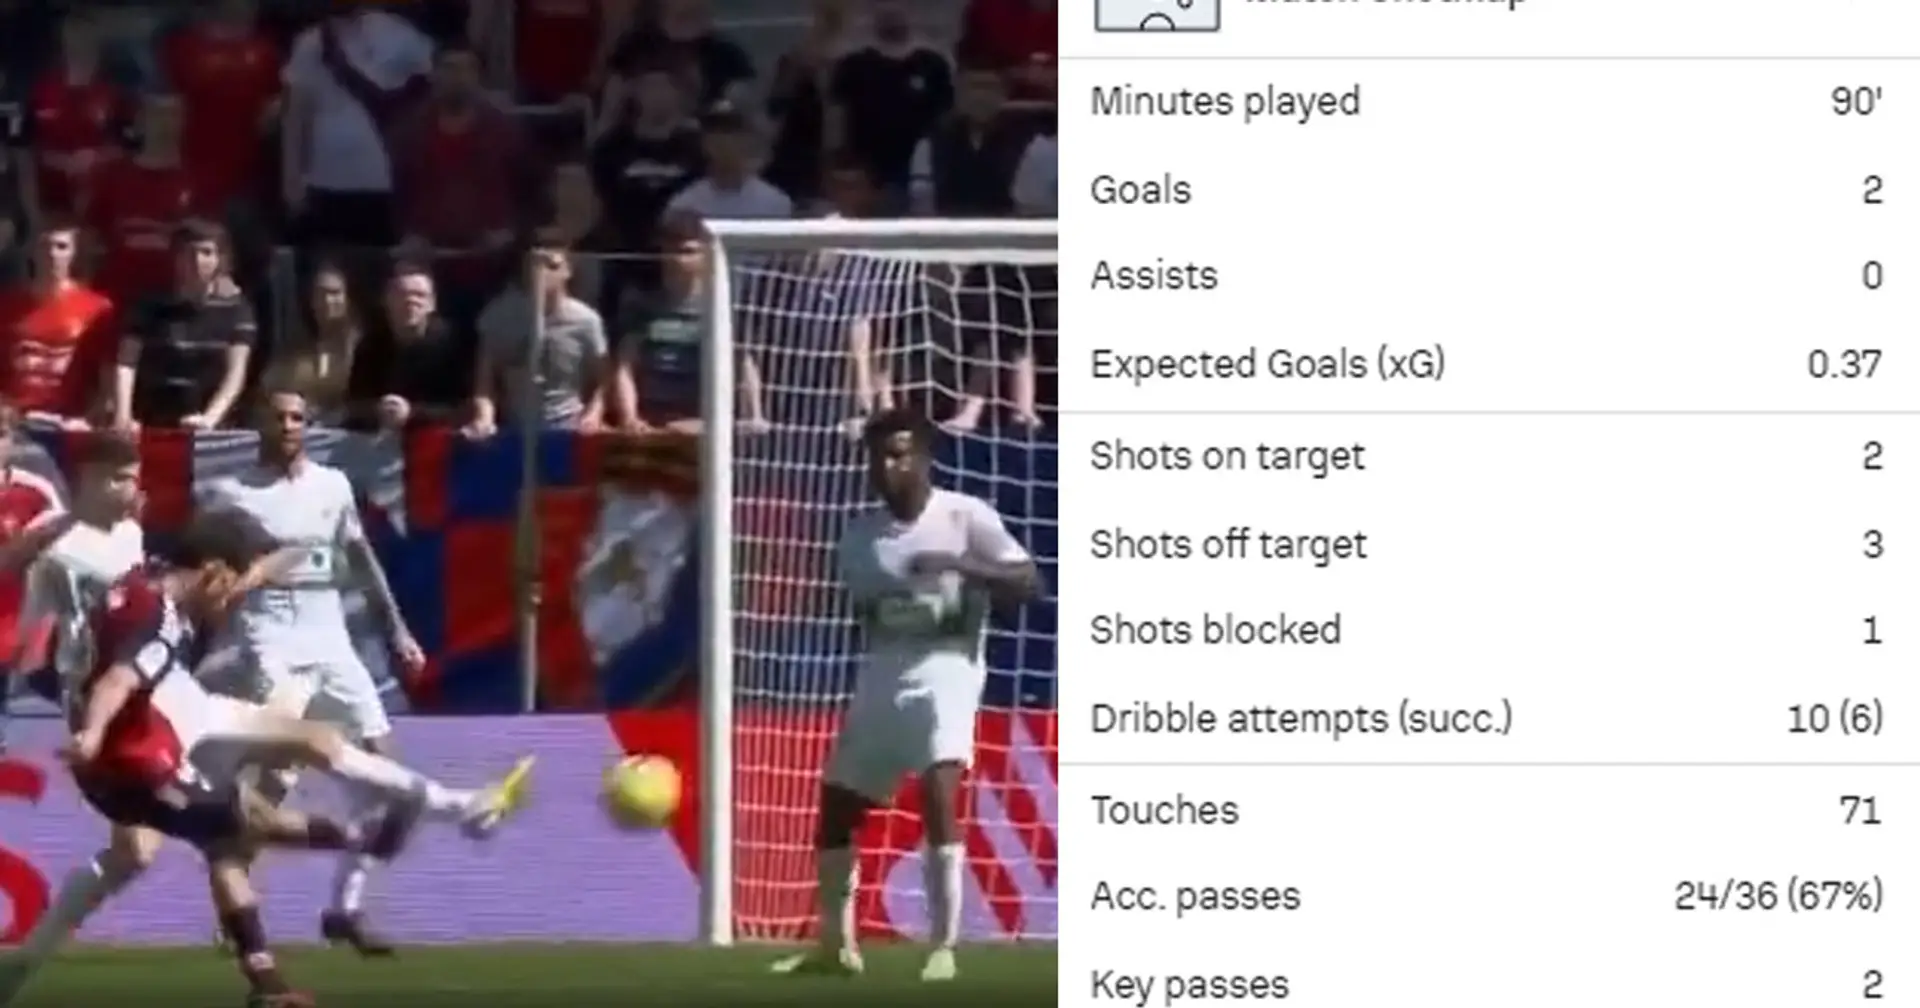 Abde marque un golazo alors que ses 2 buts permettent à Osasuna de renverser Elche – montré en photos